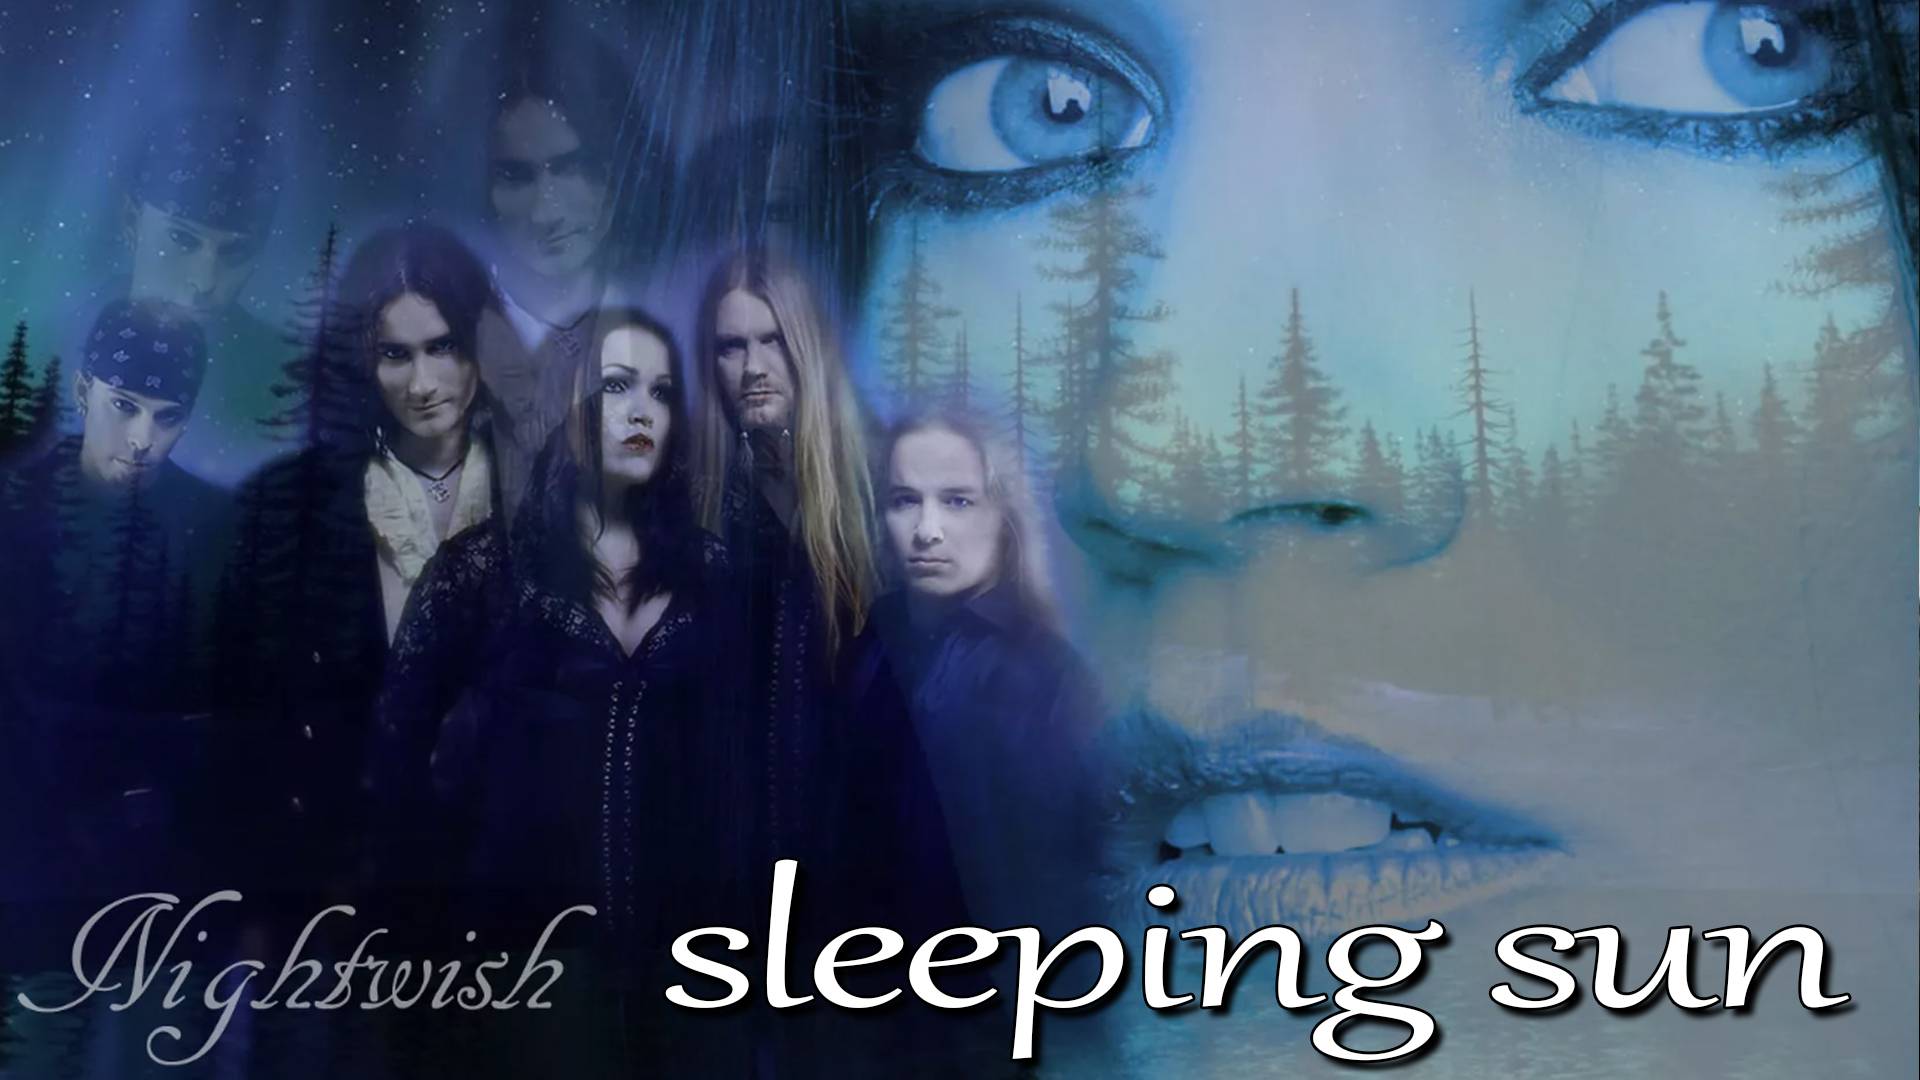 Nightwish - Sleeping sun. Caver